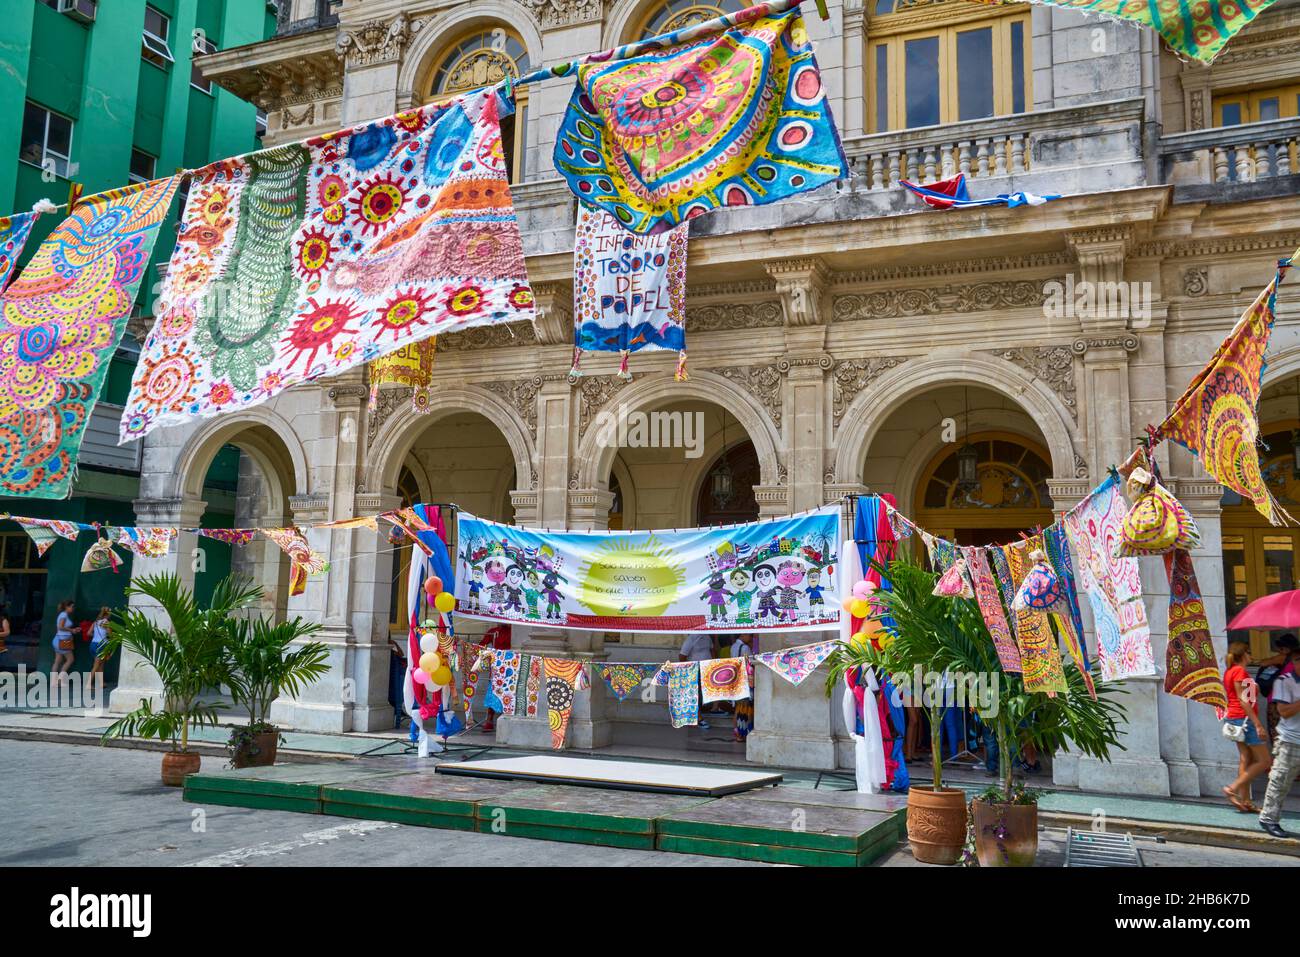 colourfull banners advertise for a cultural festival for chilfran at the Casa de la Cultura in Santa Clara, Cuba, Santa Clara, Villa Clara Stock Photo